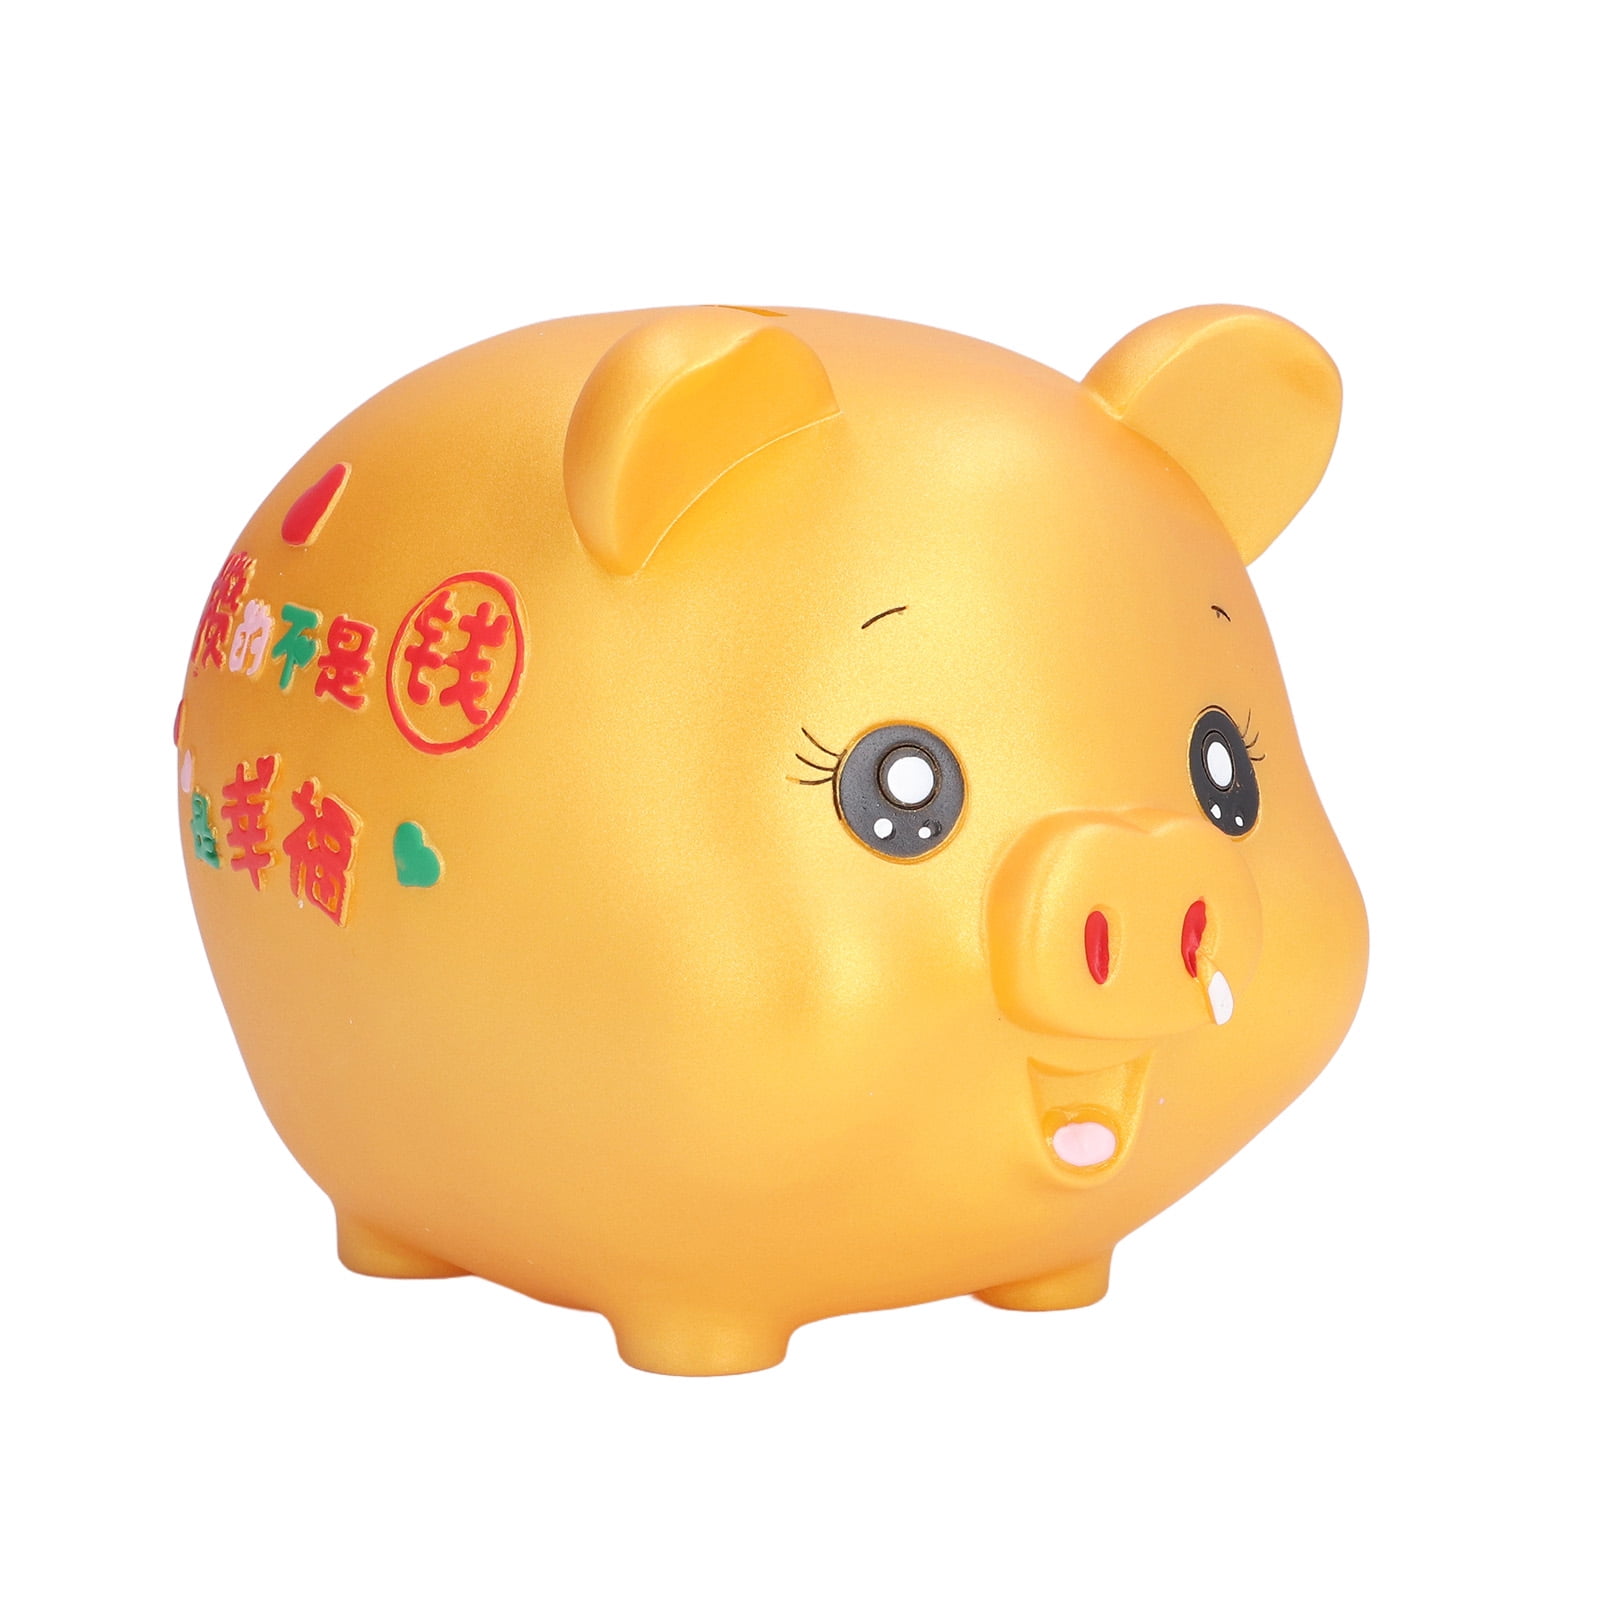 Red Parrot Coin Bank Money Coin Piggy Bank Money Saving Party Favor Gifts 